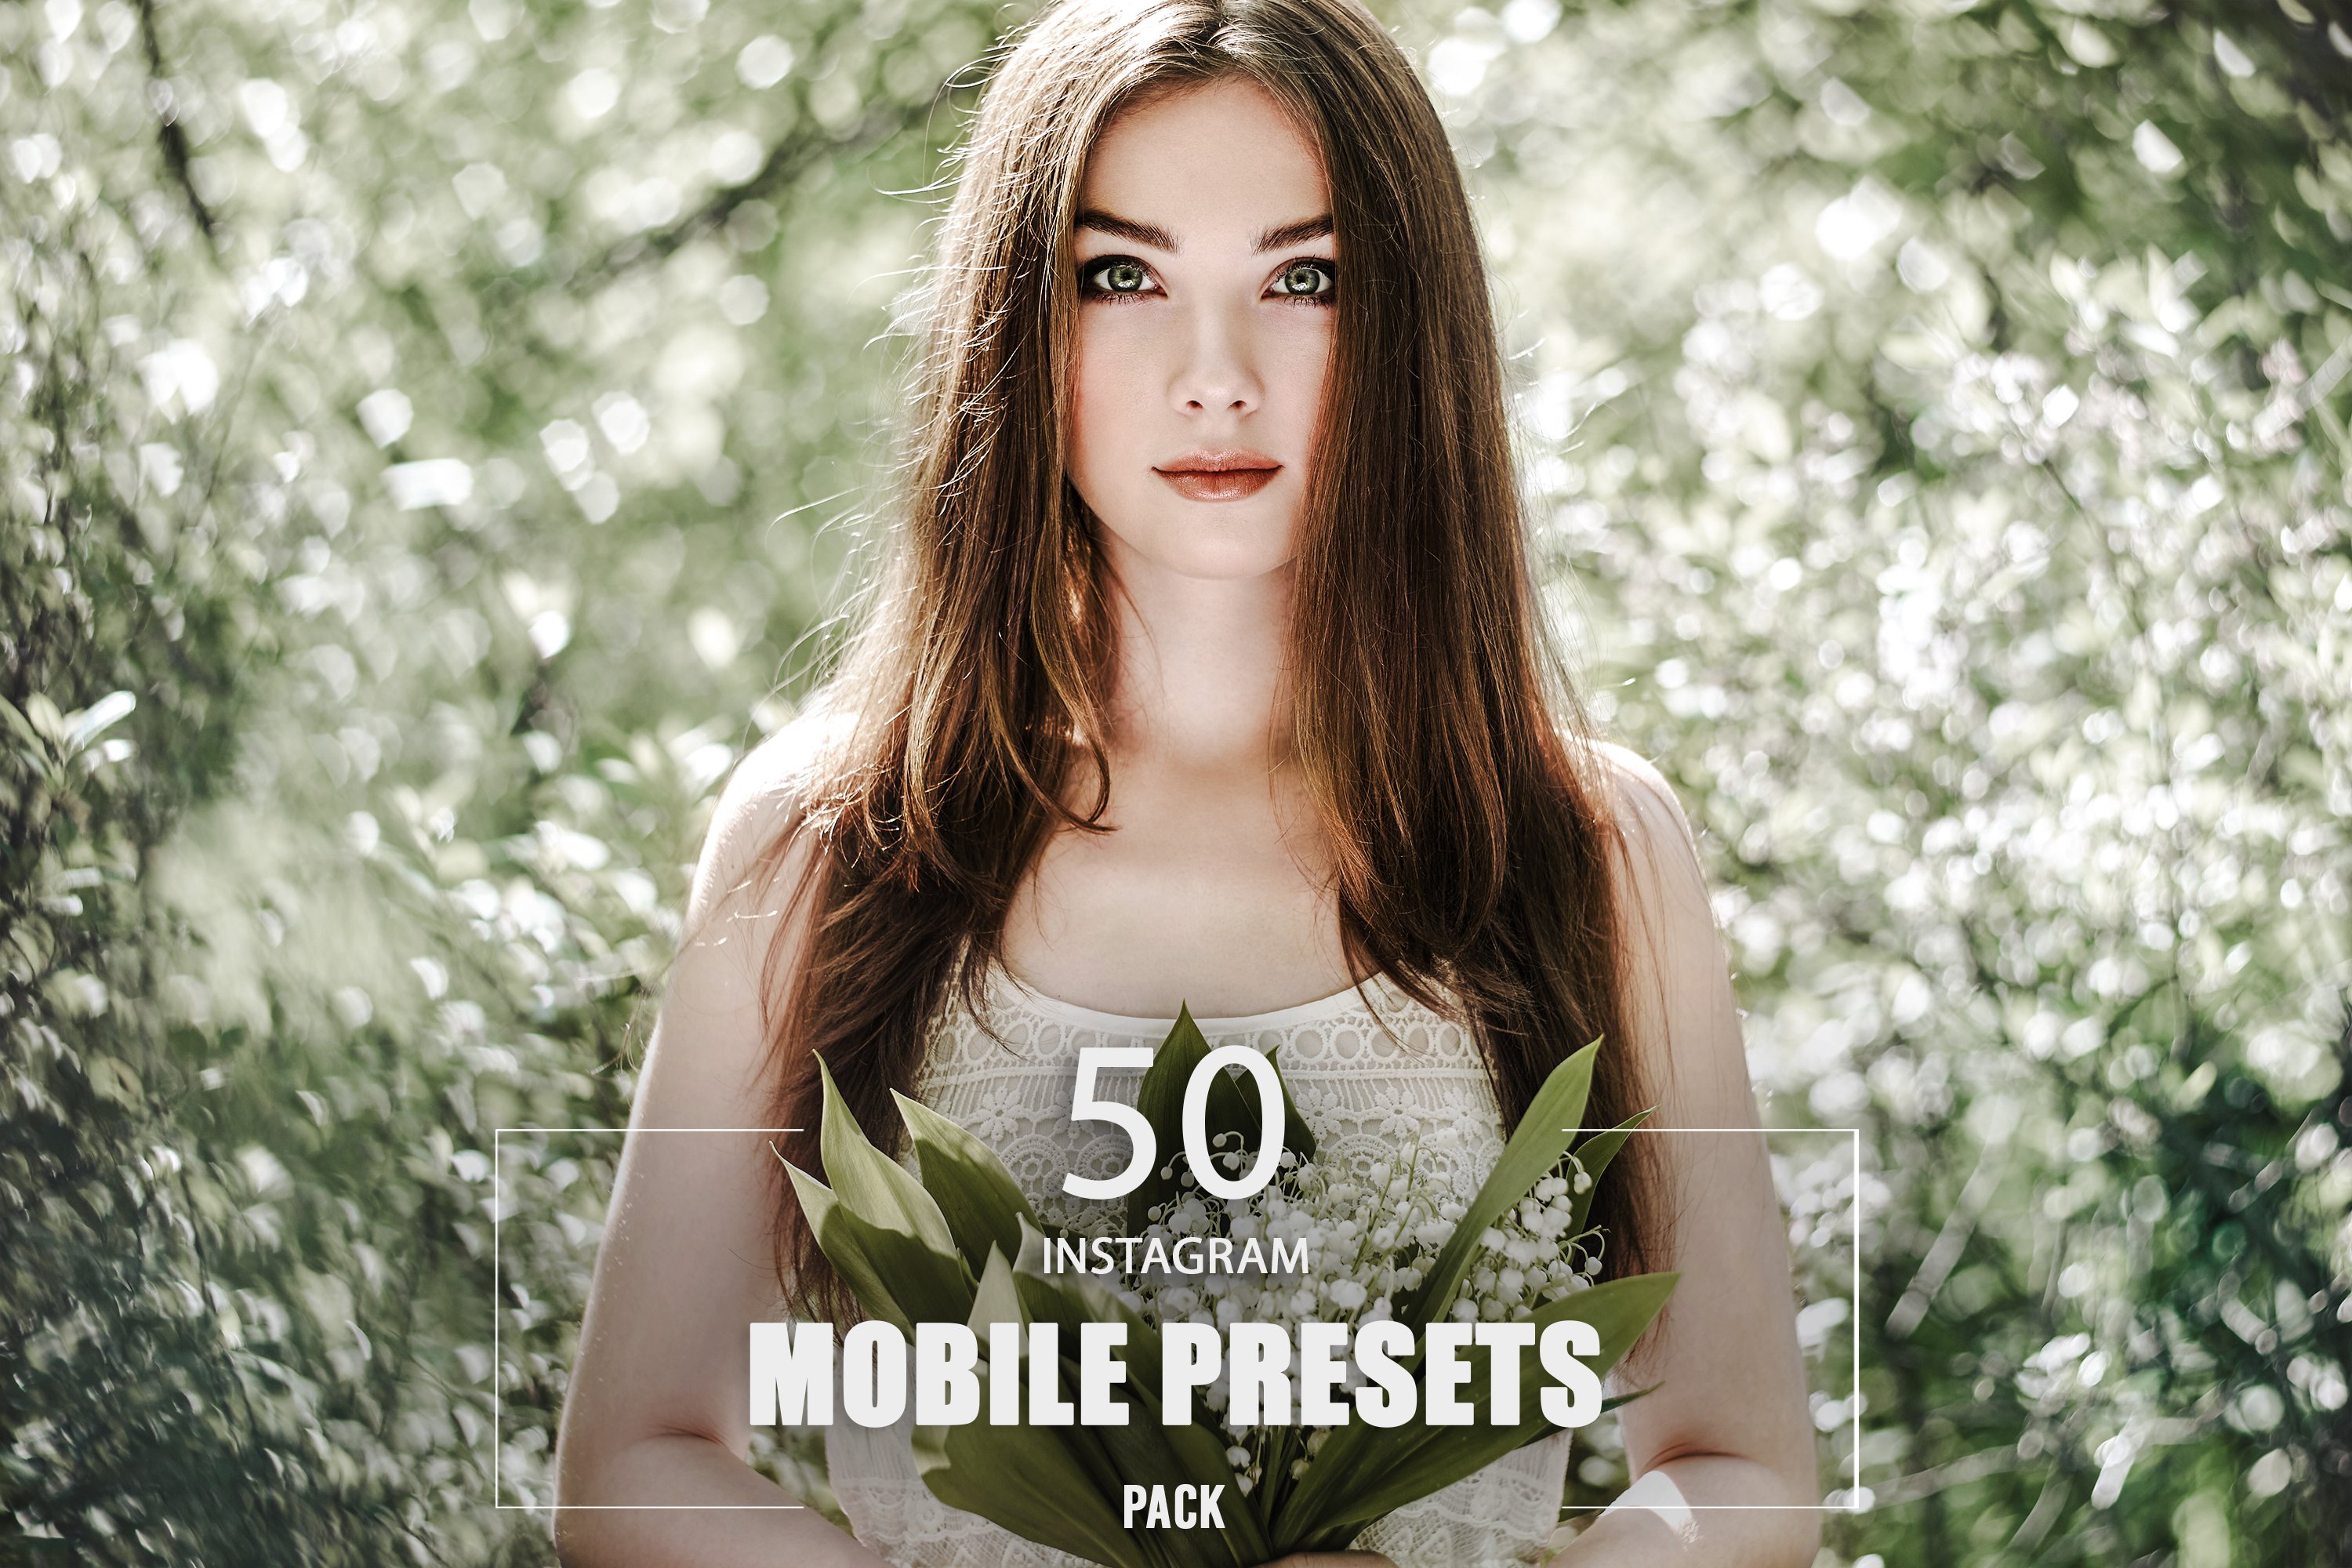 50 Instagram Mobile Presets Packcover image.